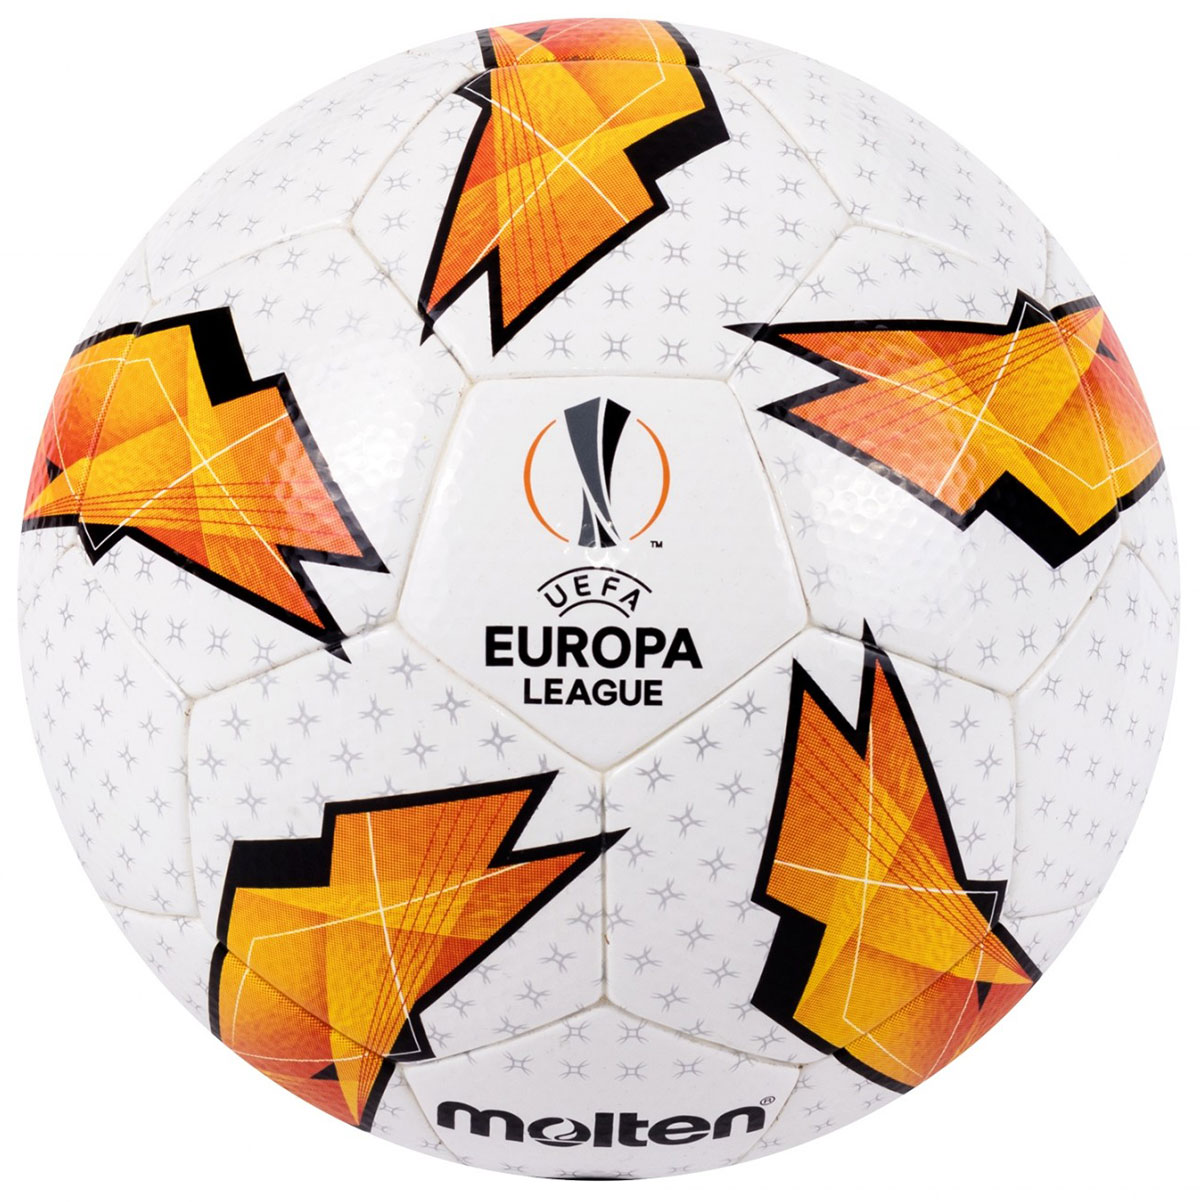 MOLTEN OFFICIAL MATCH BALL OF THE UEFA EUROPA LEAGUE 2018-2019